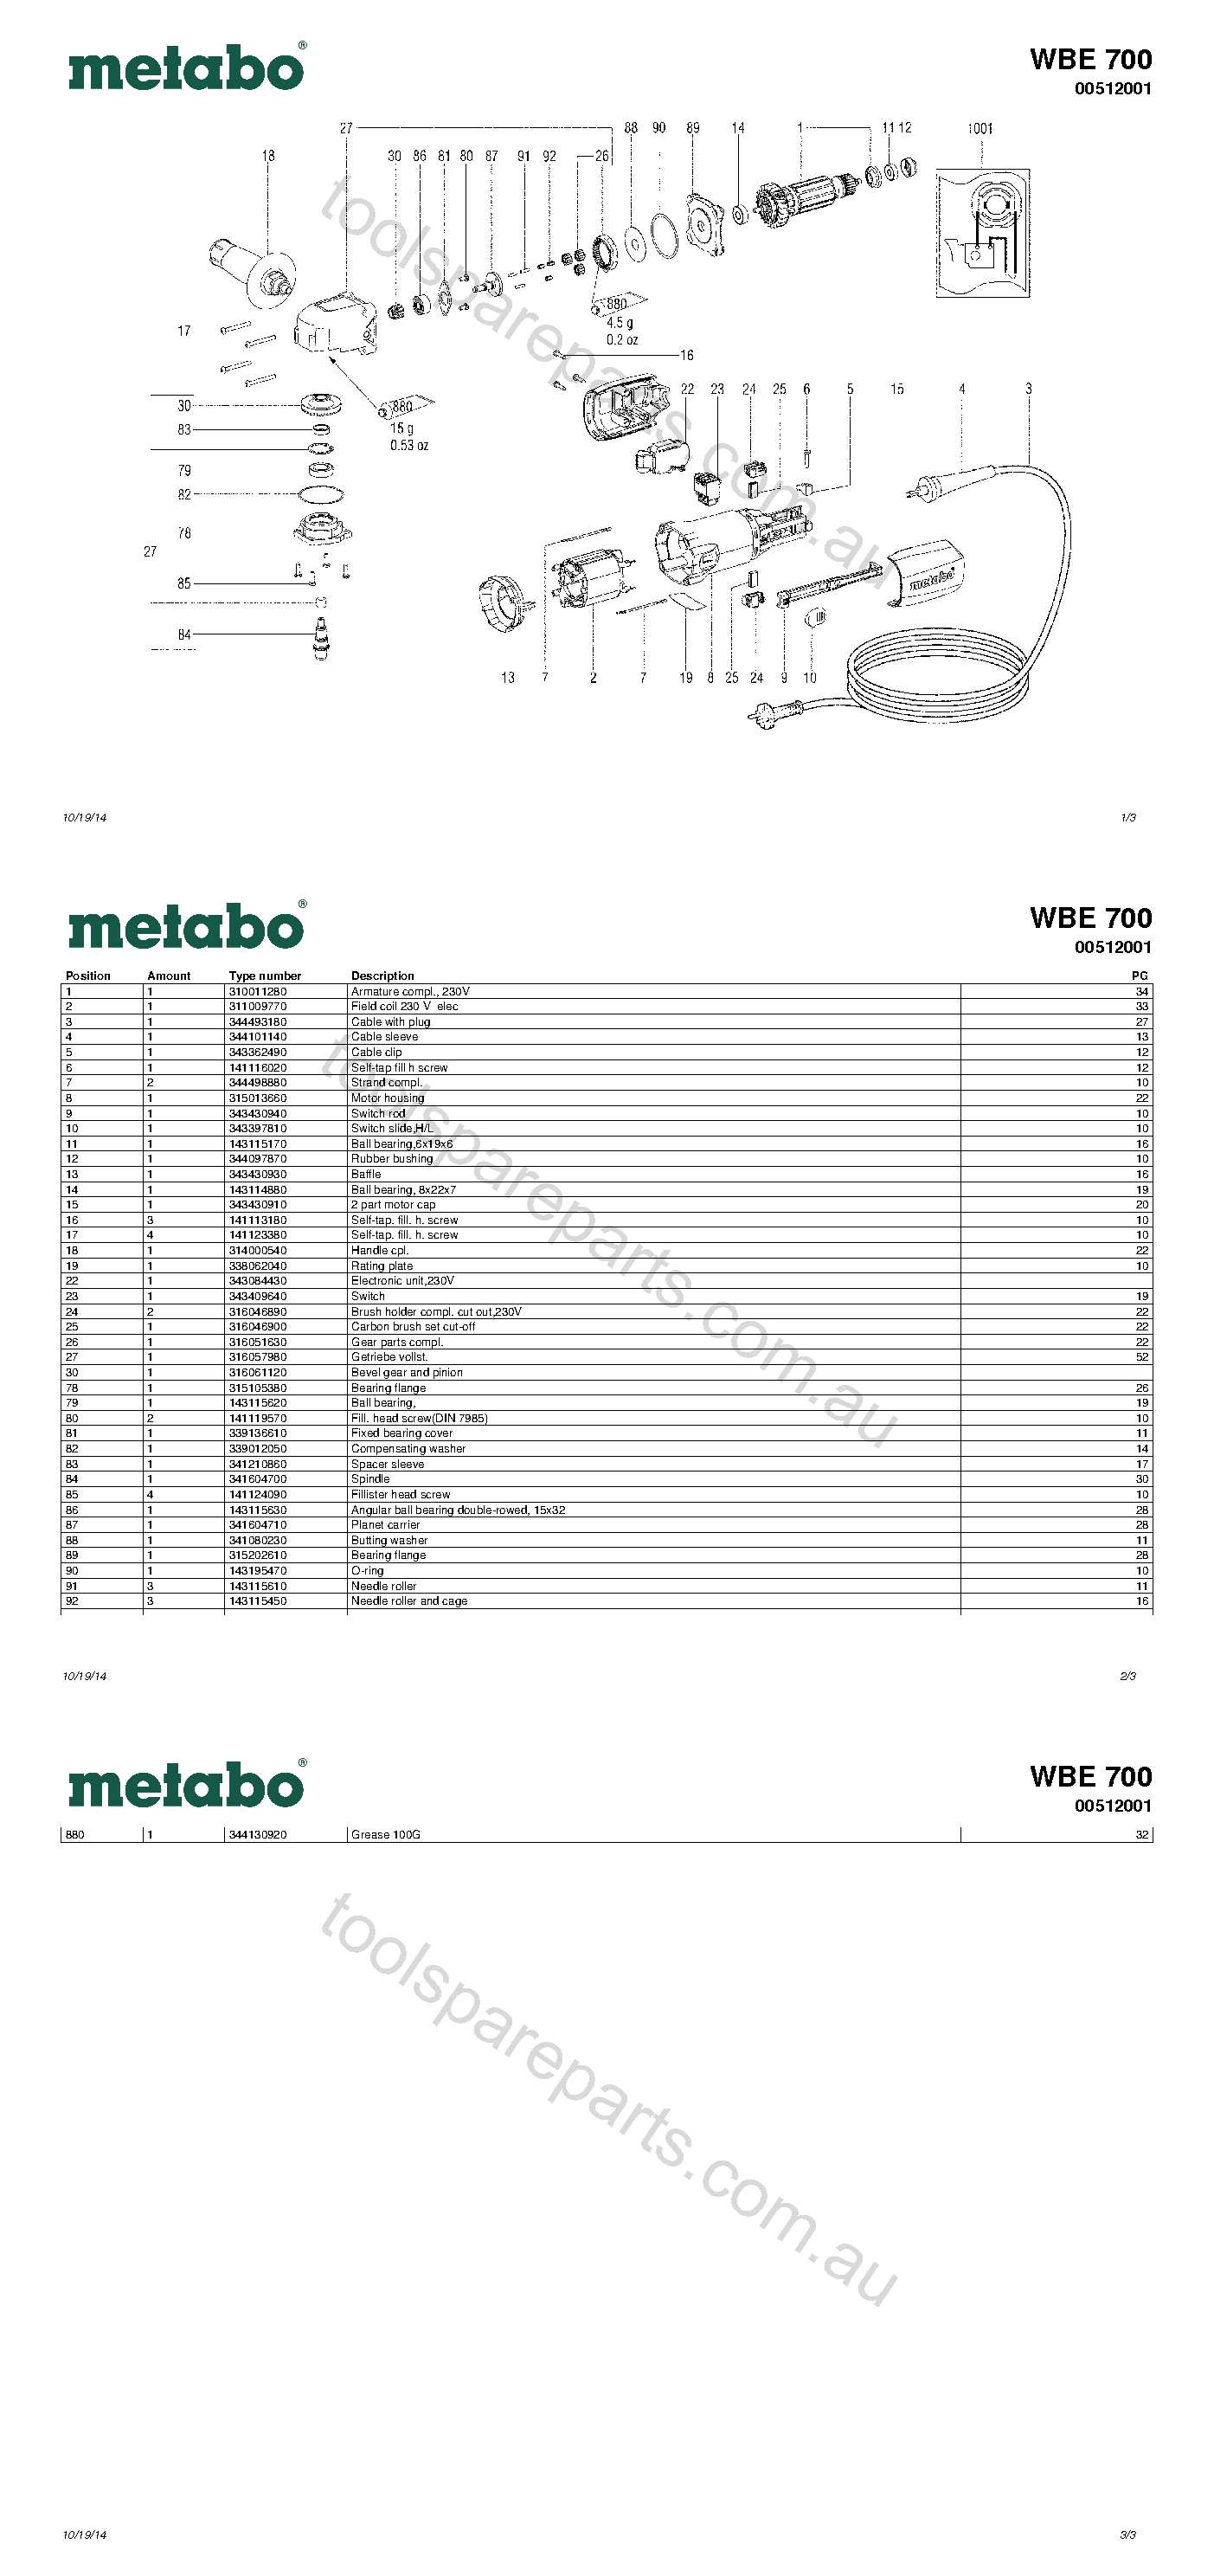 Metabo WBE 700 00512001  Diagram 1